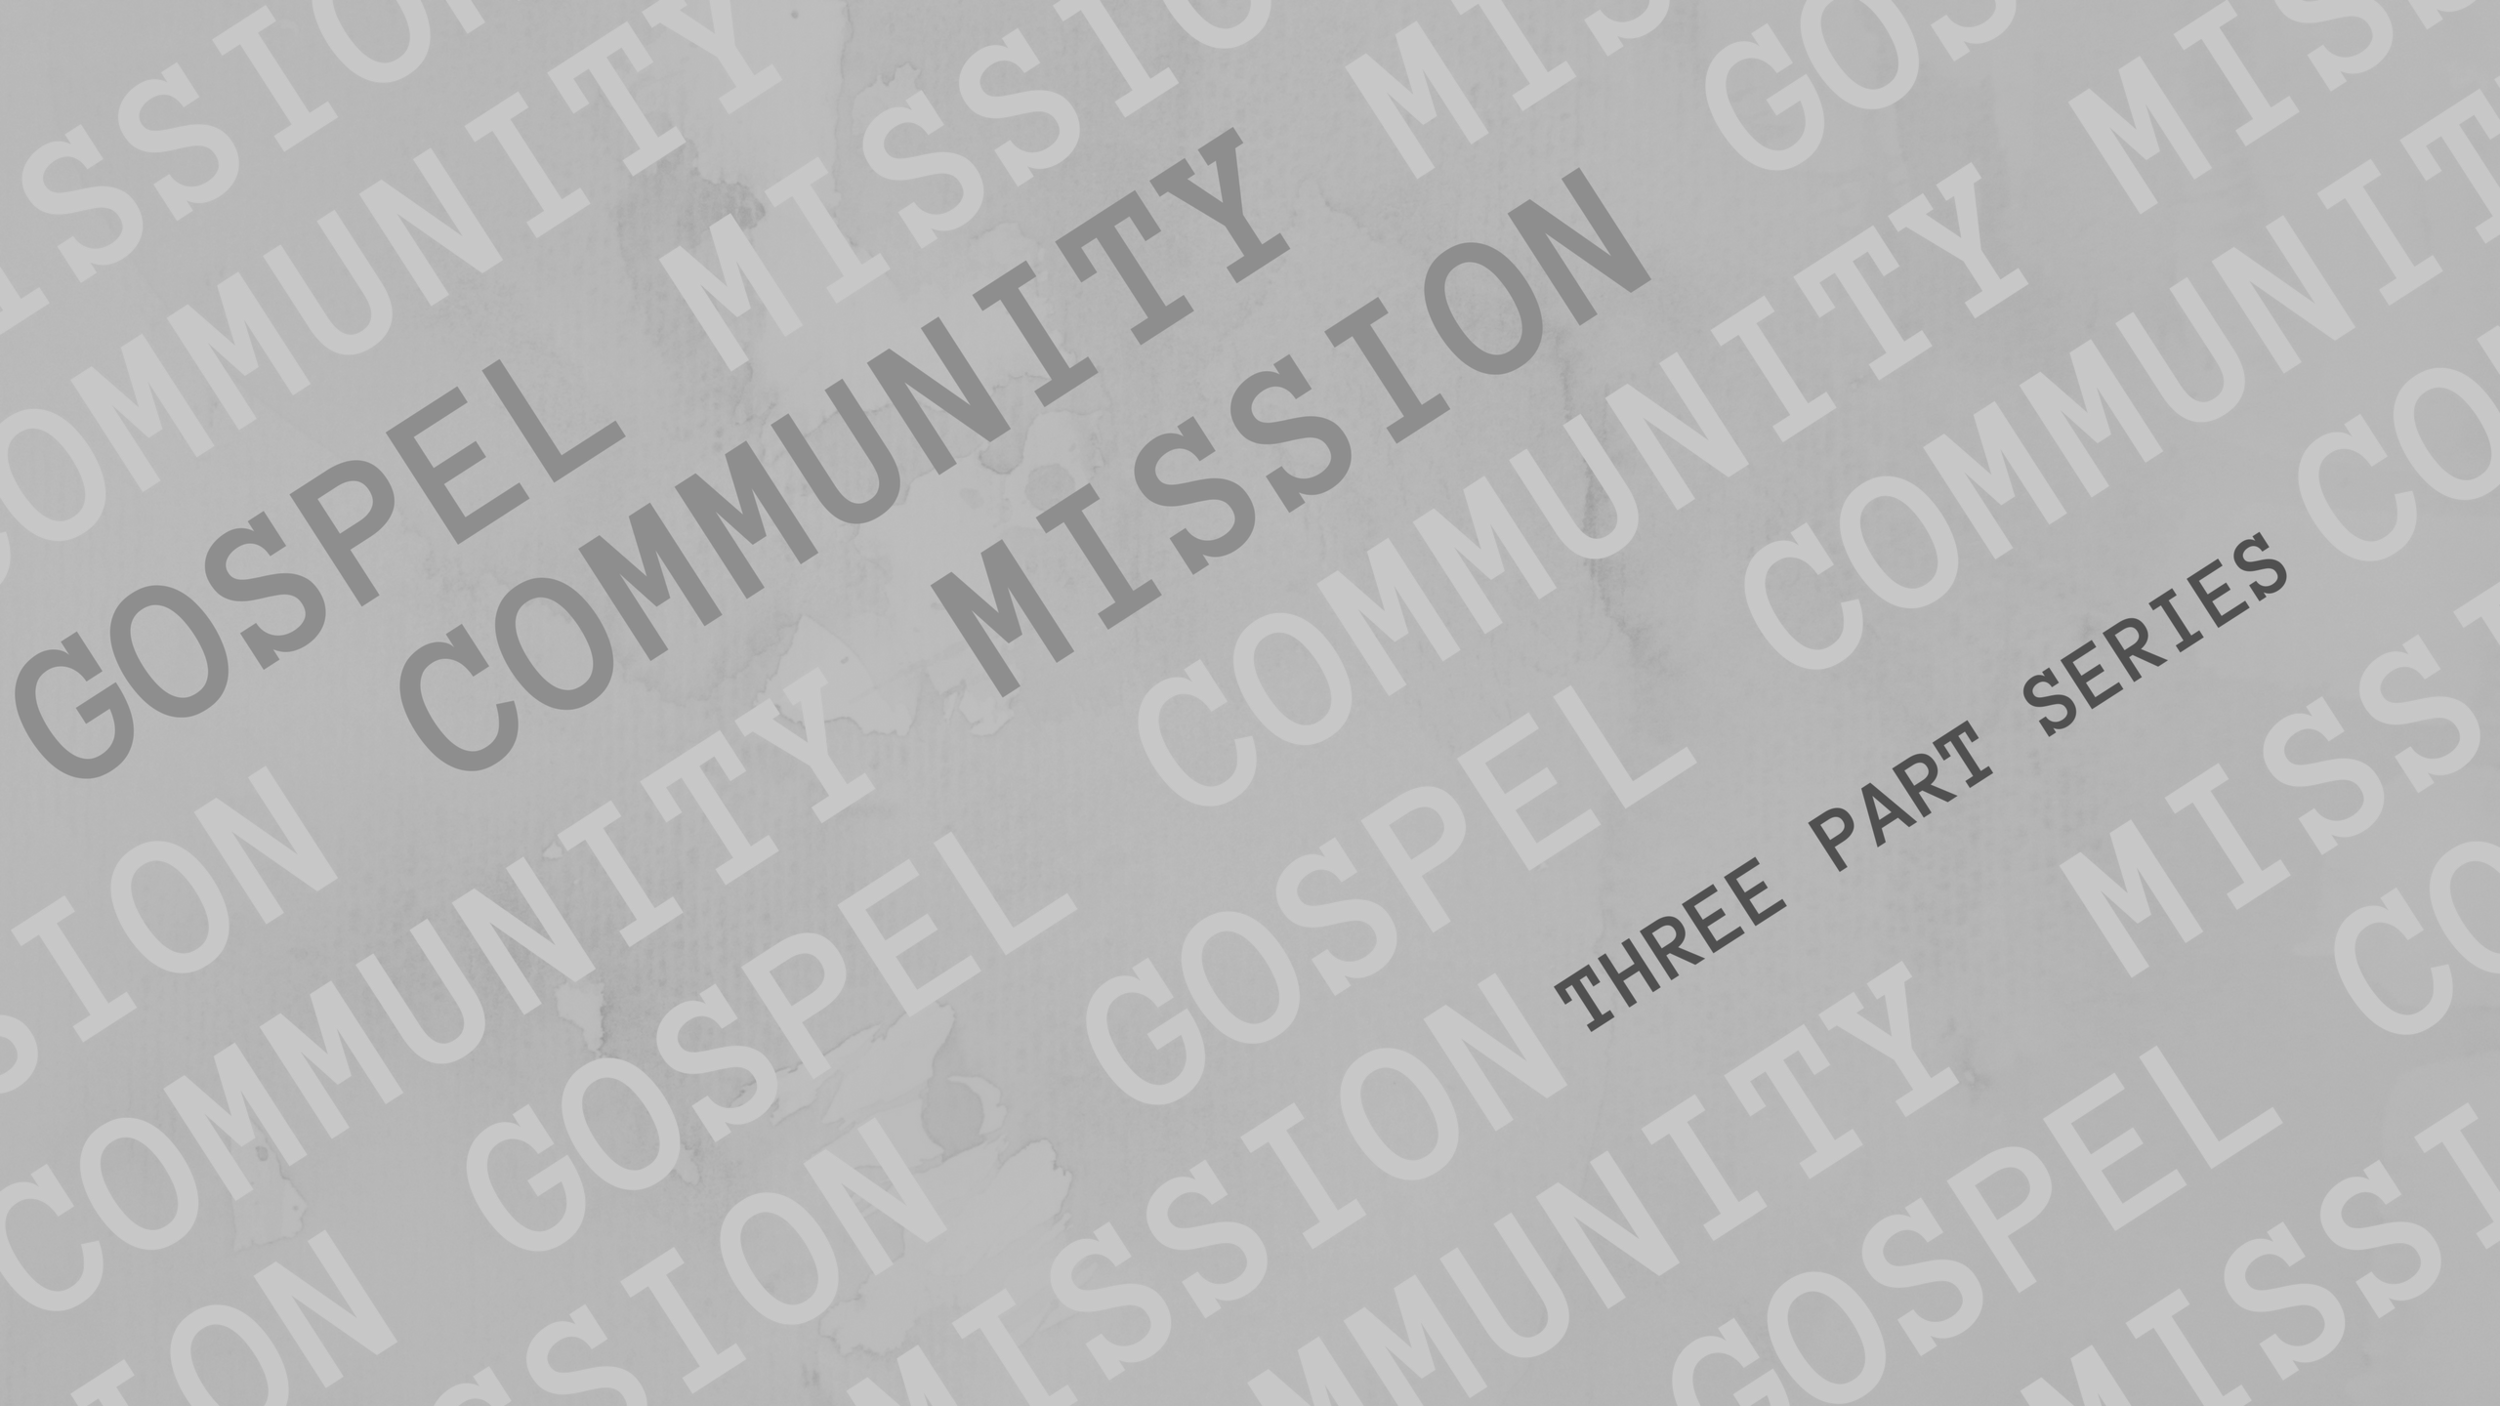 Gospel, Community, Mission